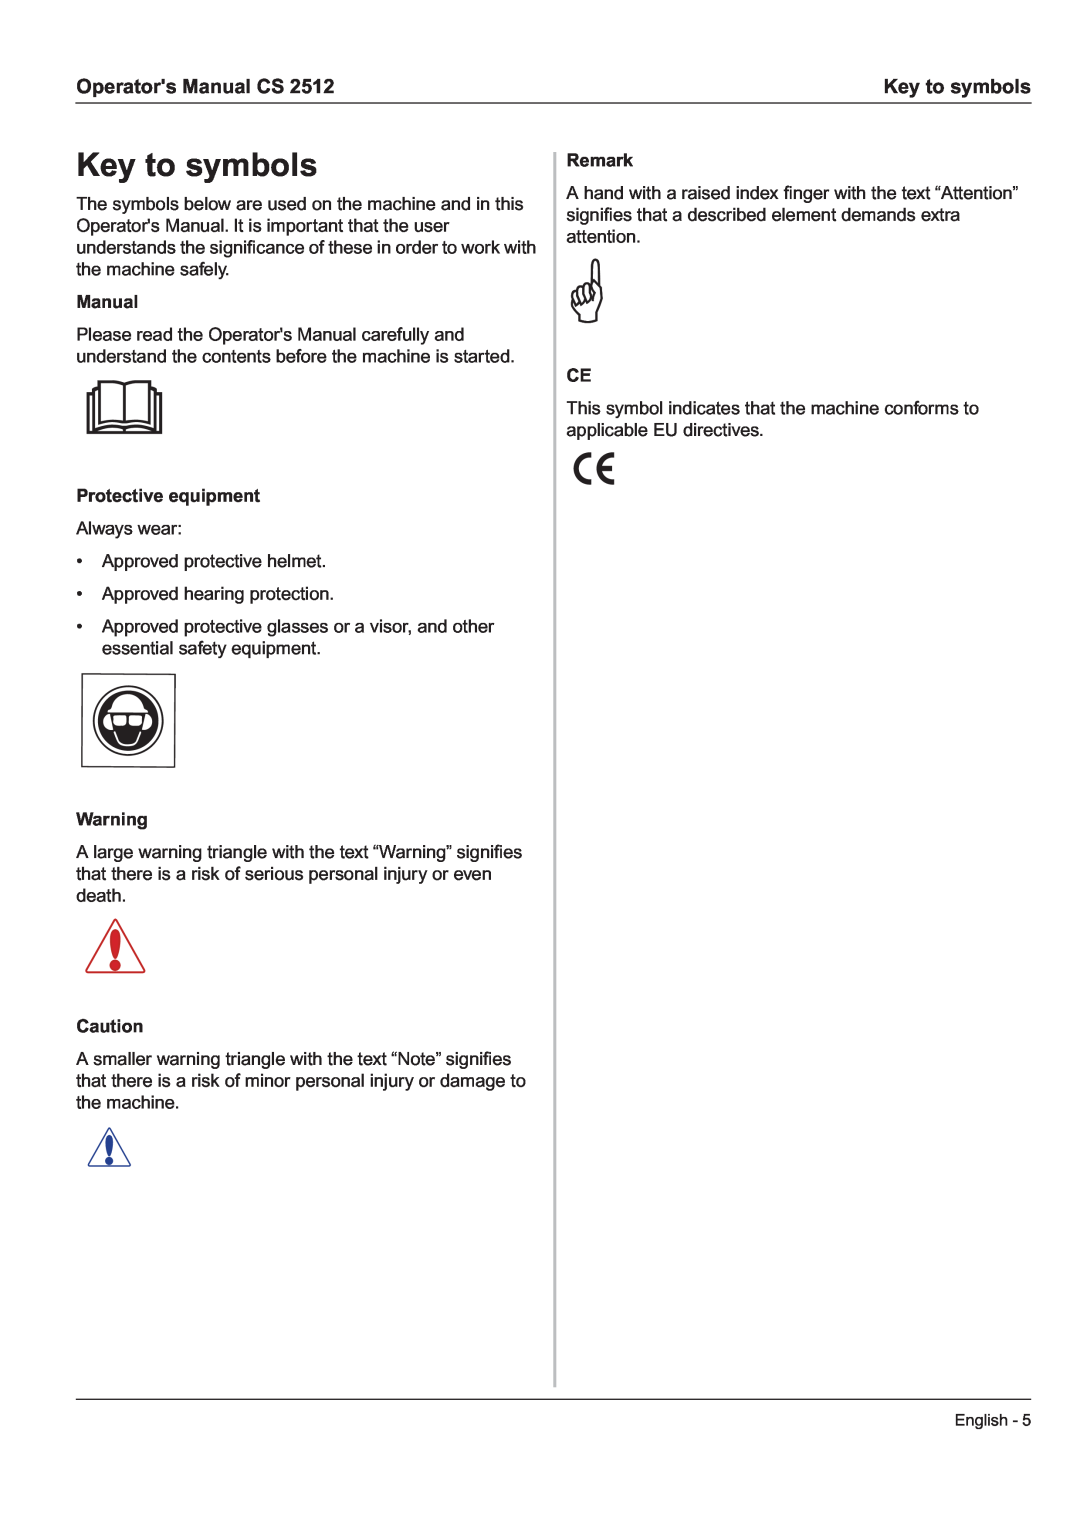 Husqvarna CS 2512 manual Key to symbols, Operators Manual CS 